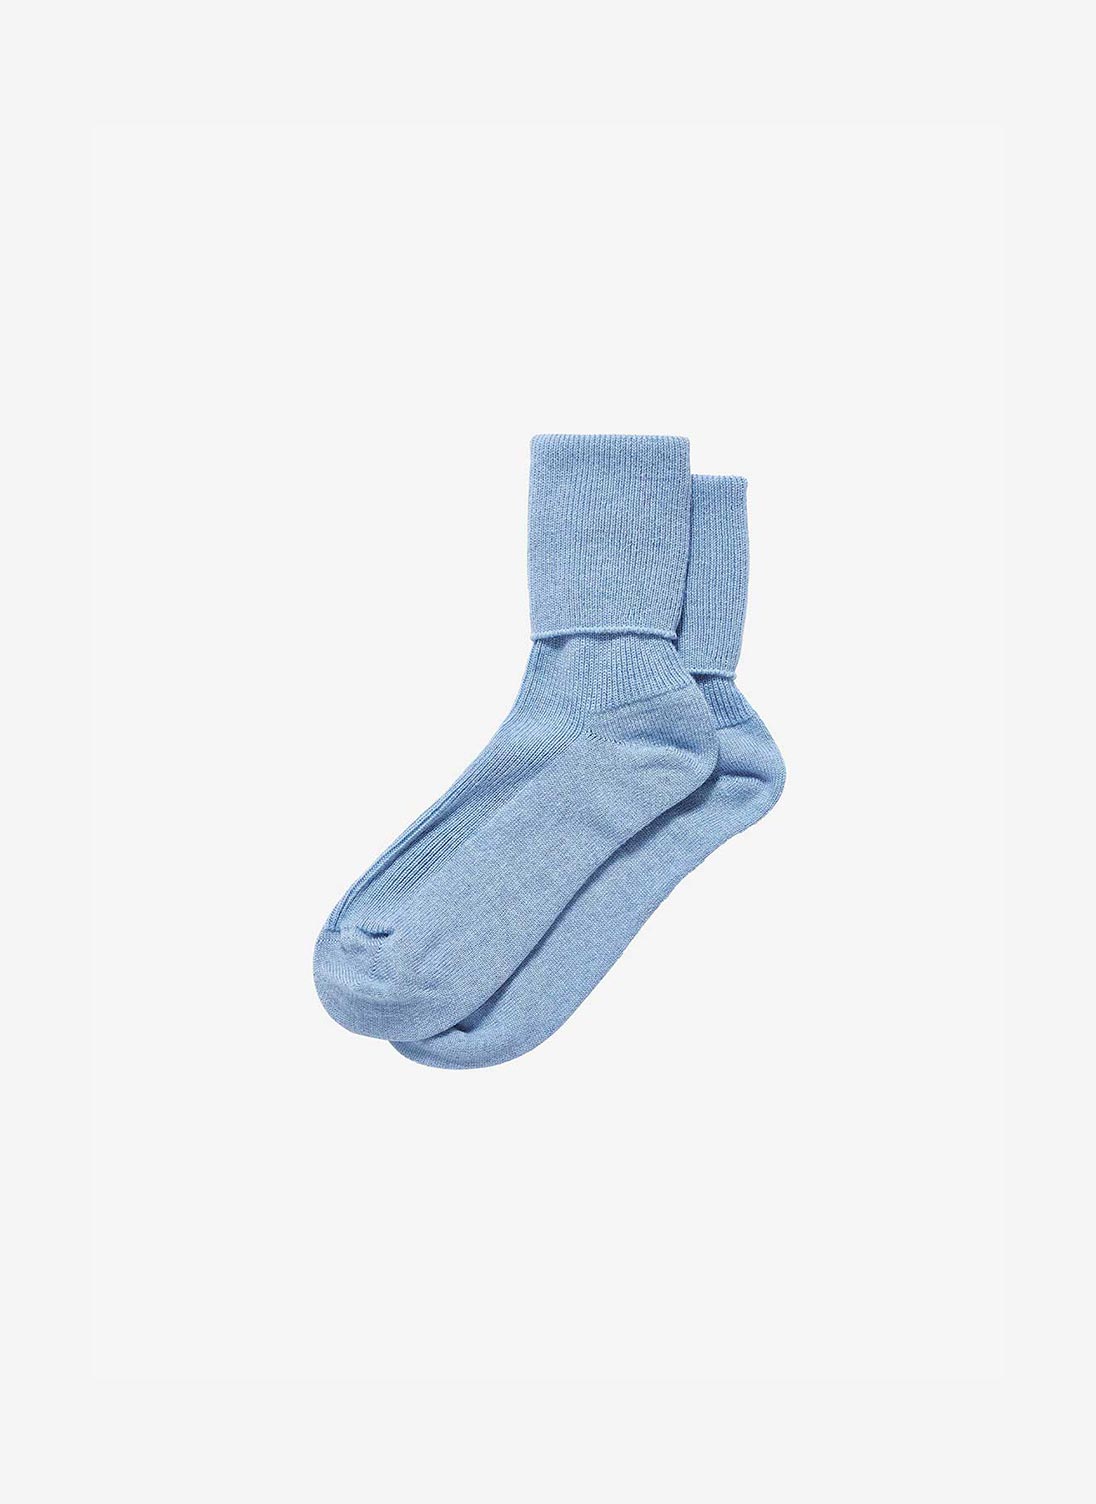 Women's Cashmere Socks Iris